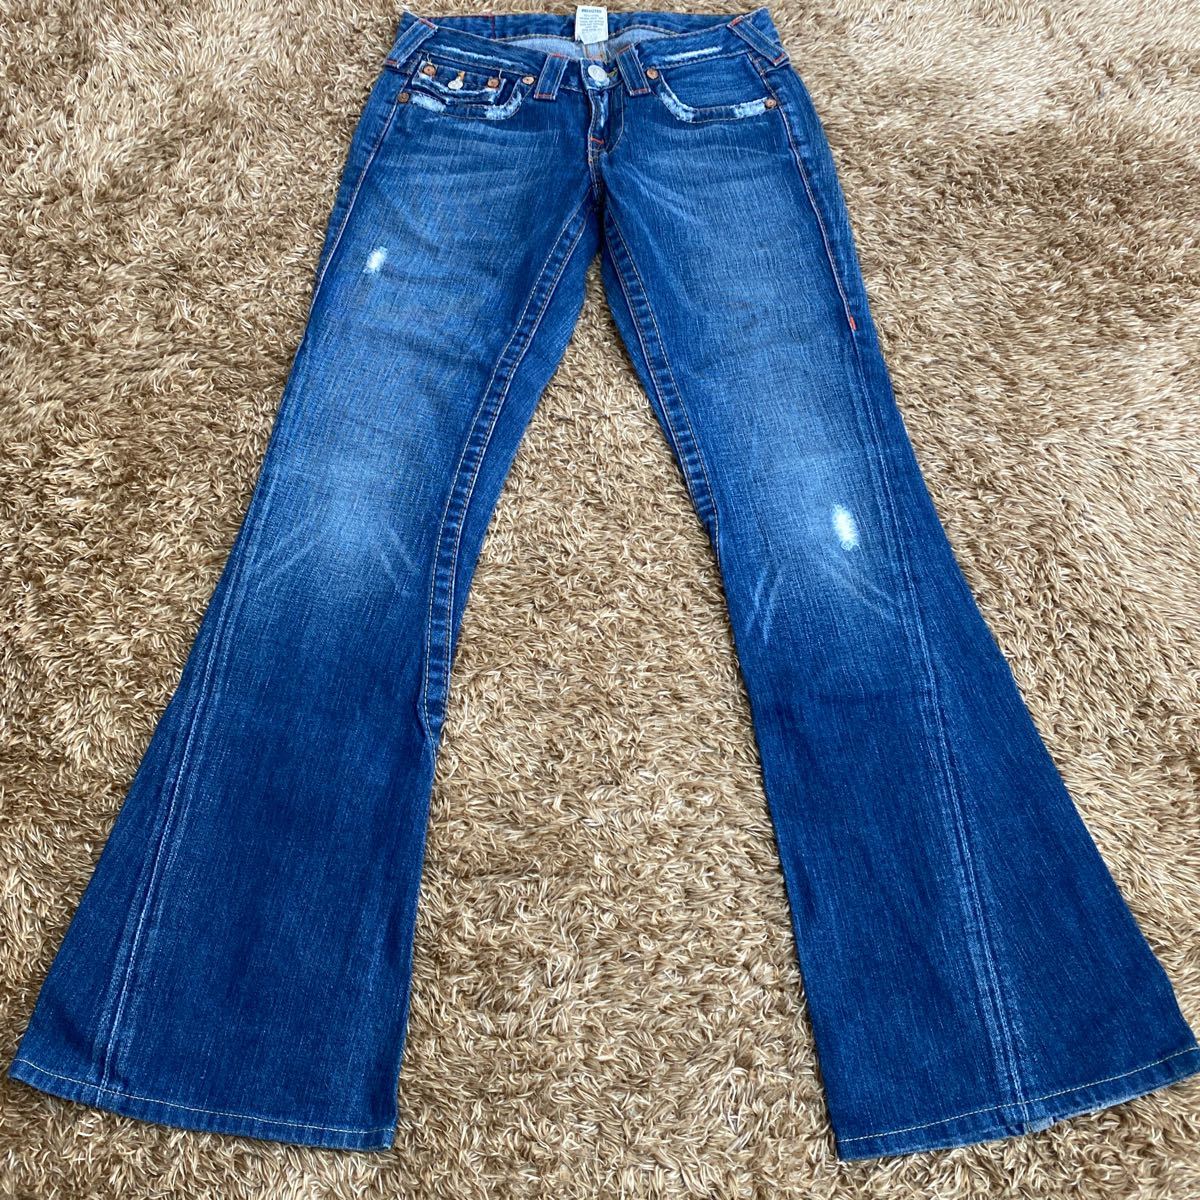 t25 TRUE RELIGION flair jeans size 26 inscription USA made 